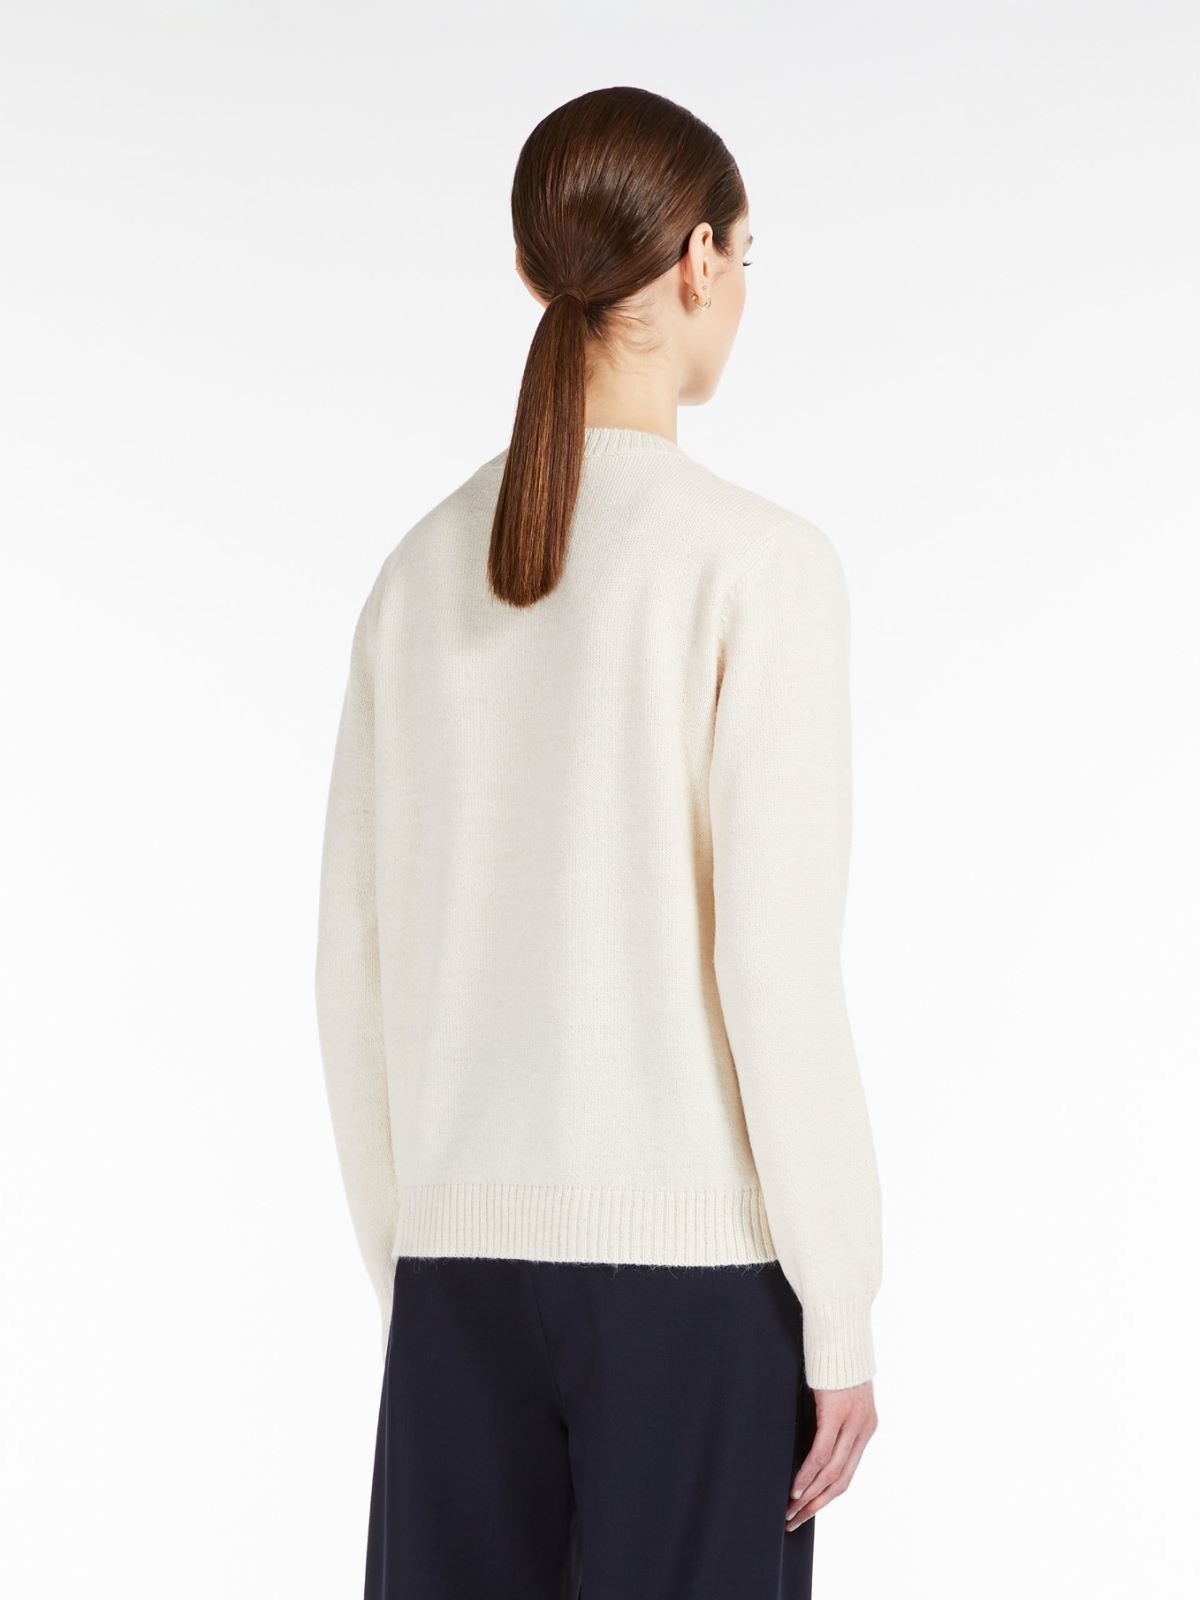 Alpaca and wool yarn sweater, white | Weekend Max Mara